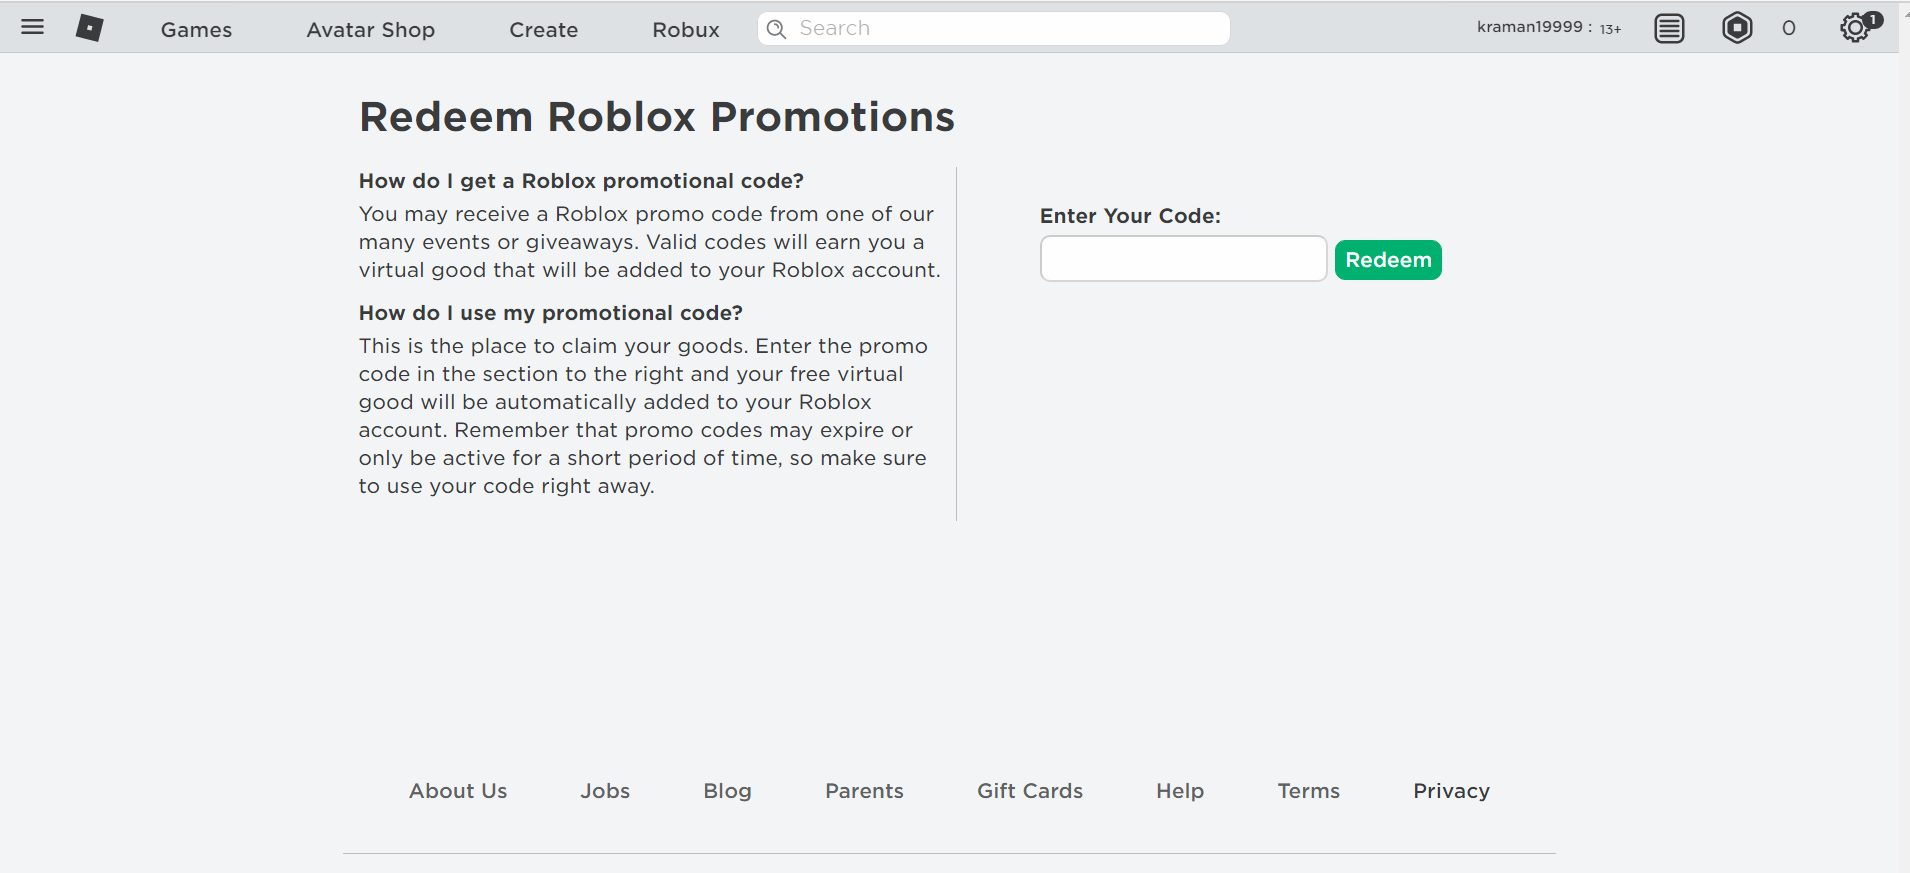 Your roblox code. Roblox Promo code. Redeem Roblox codes. Redeem Roblox promotions. Redeem Roblox promocodes.